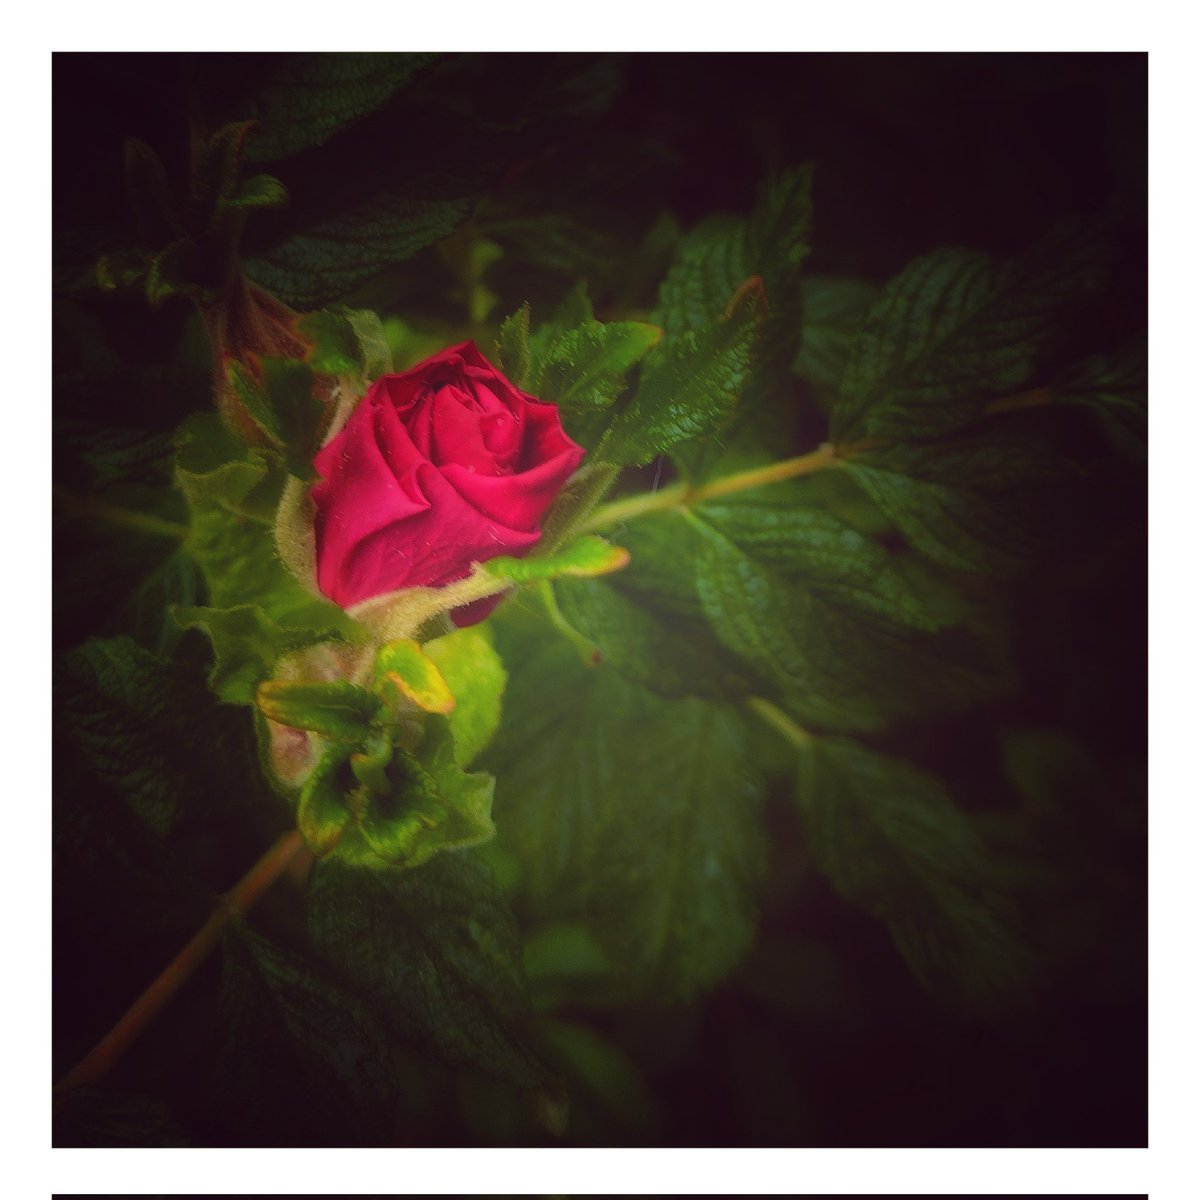 Young rose

#FlowersOnFriday #FlowersOfTwitter #flower #red #flowerlovers #XNatureCommunity #XNaturePhotography #TwitterNatureCommunity #TwitterNaturePhotography #NaturePhotography #NatureBeauty #macrophotography #flowerphotography